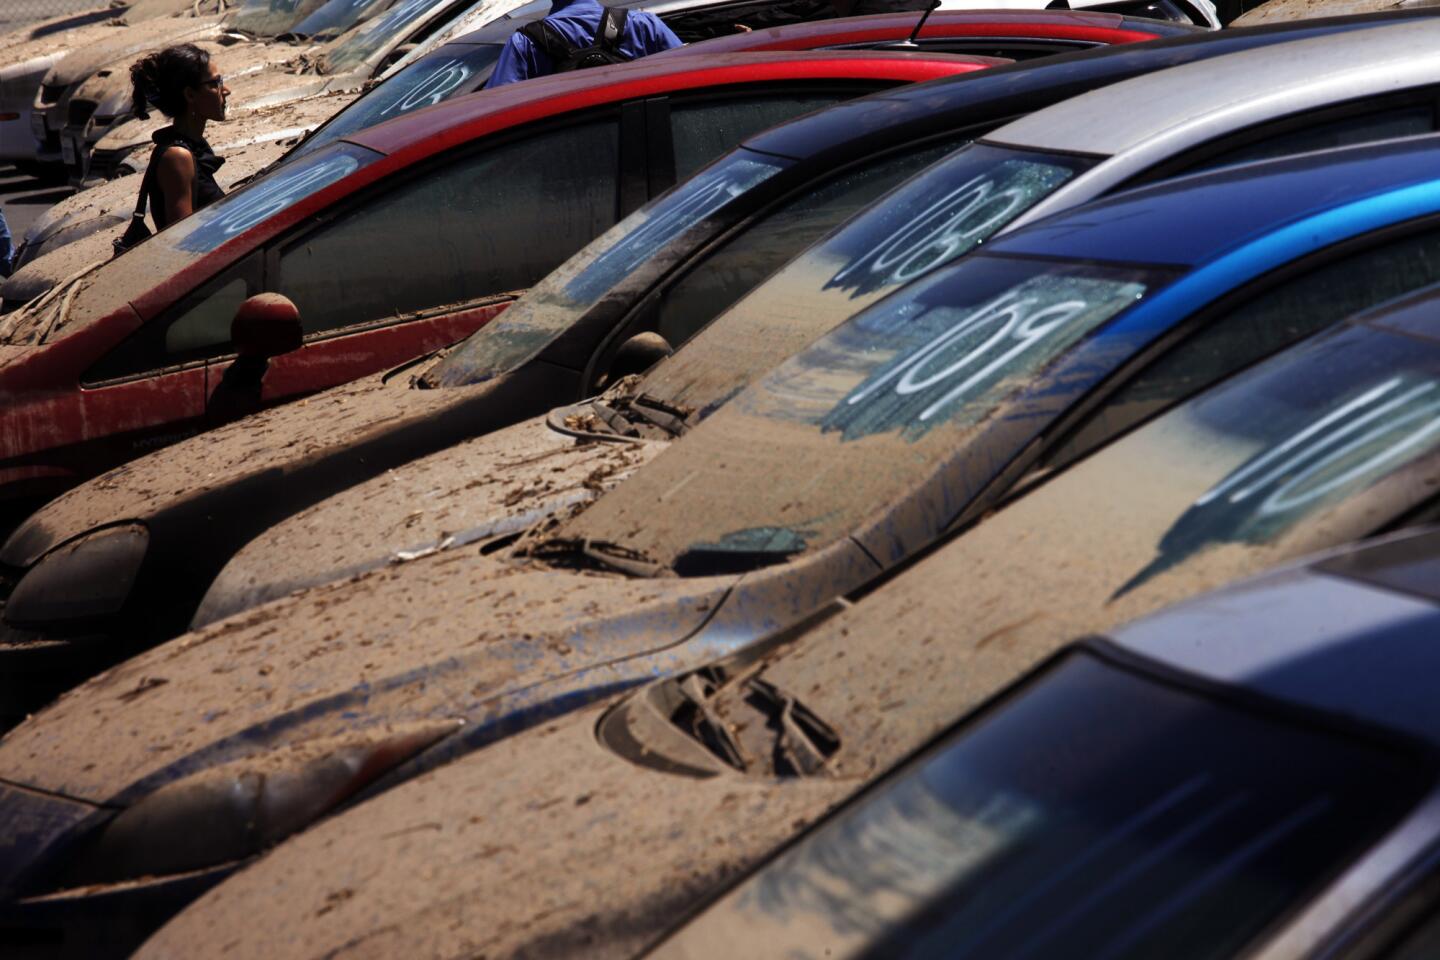 Flood-damaged cars